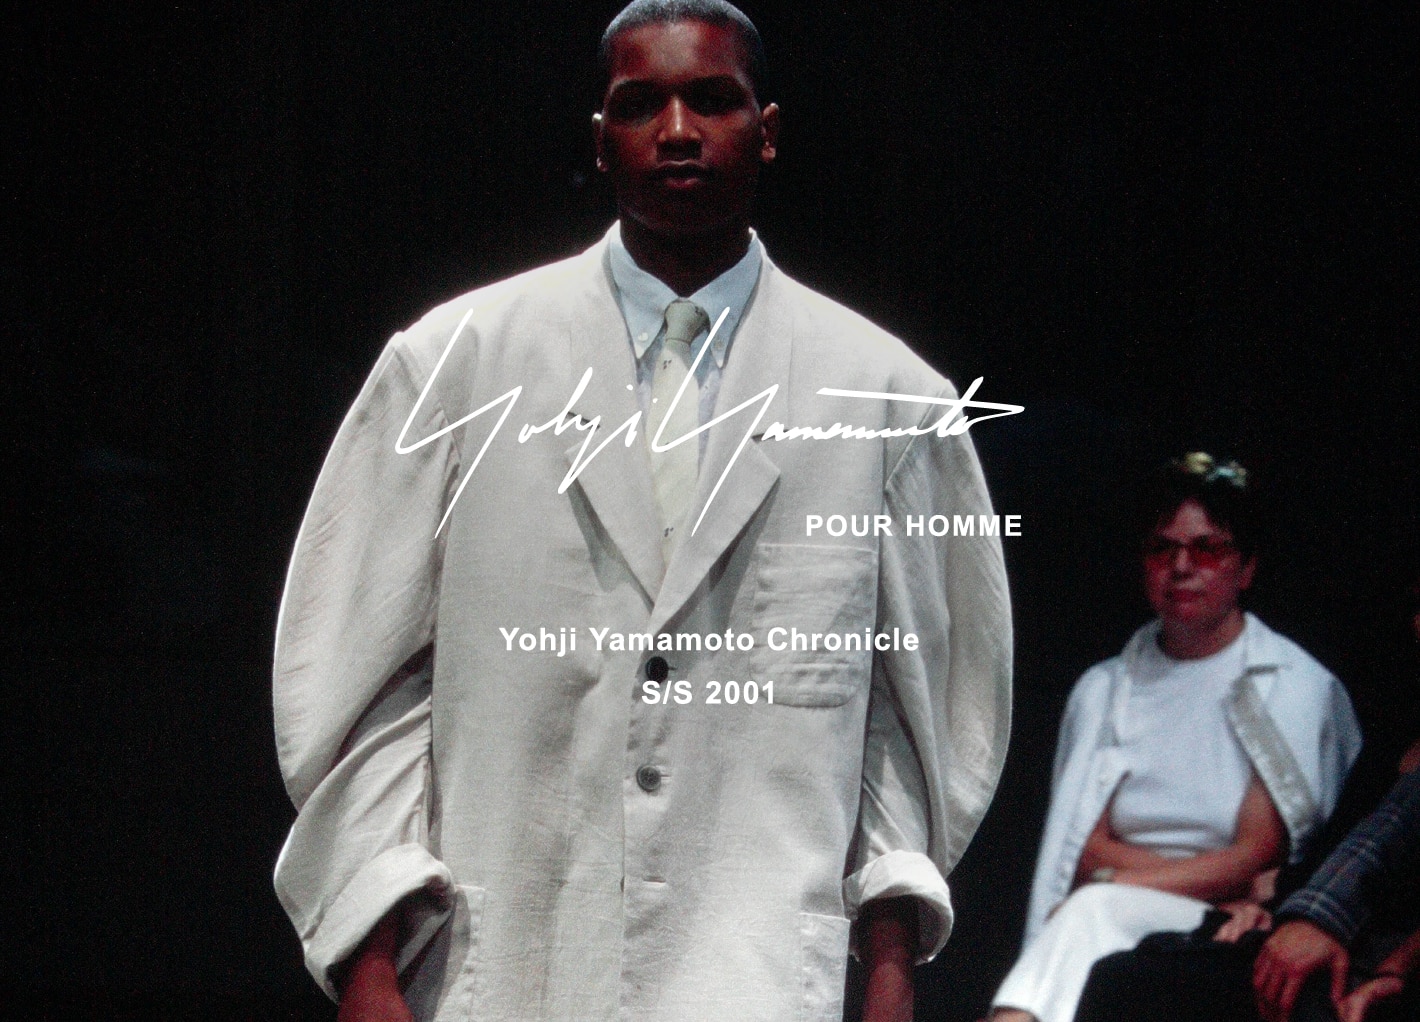 Yohji Yamamoto Chronicle – POUR HOMME S/S 2001